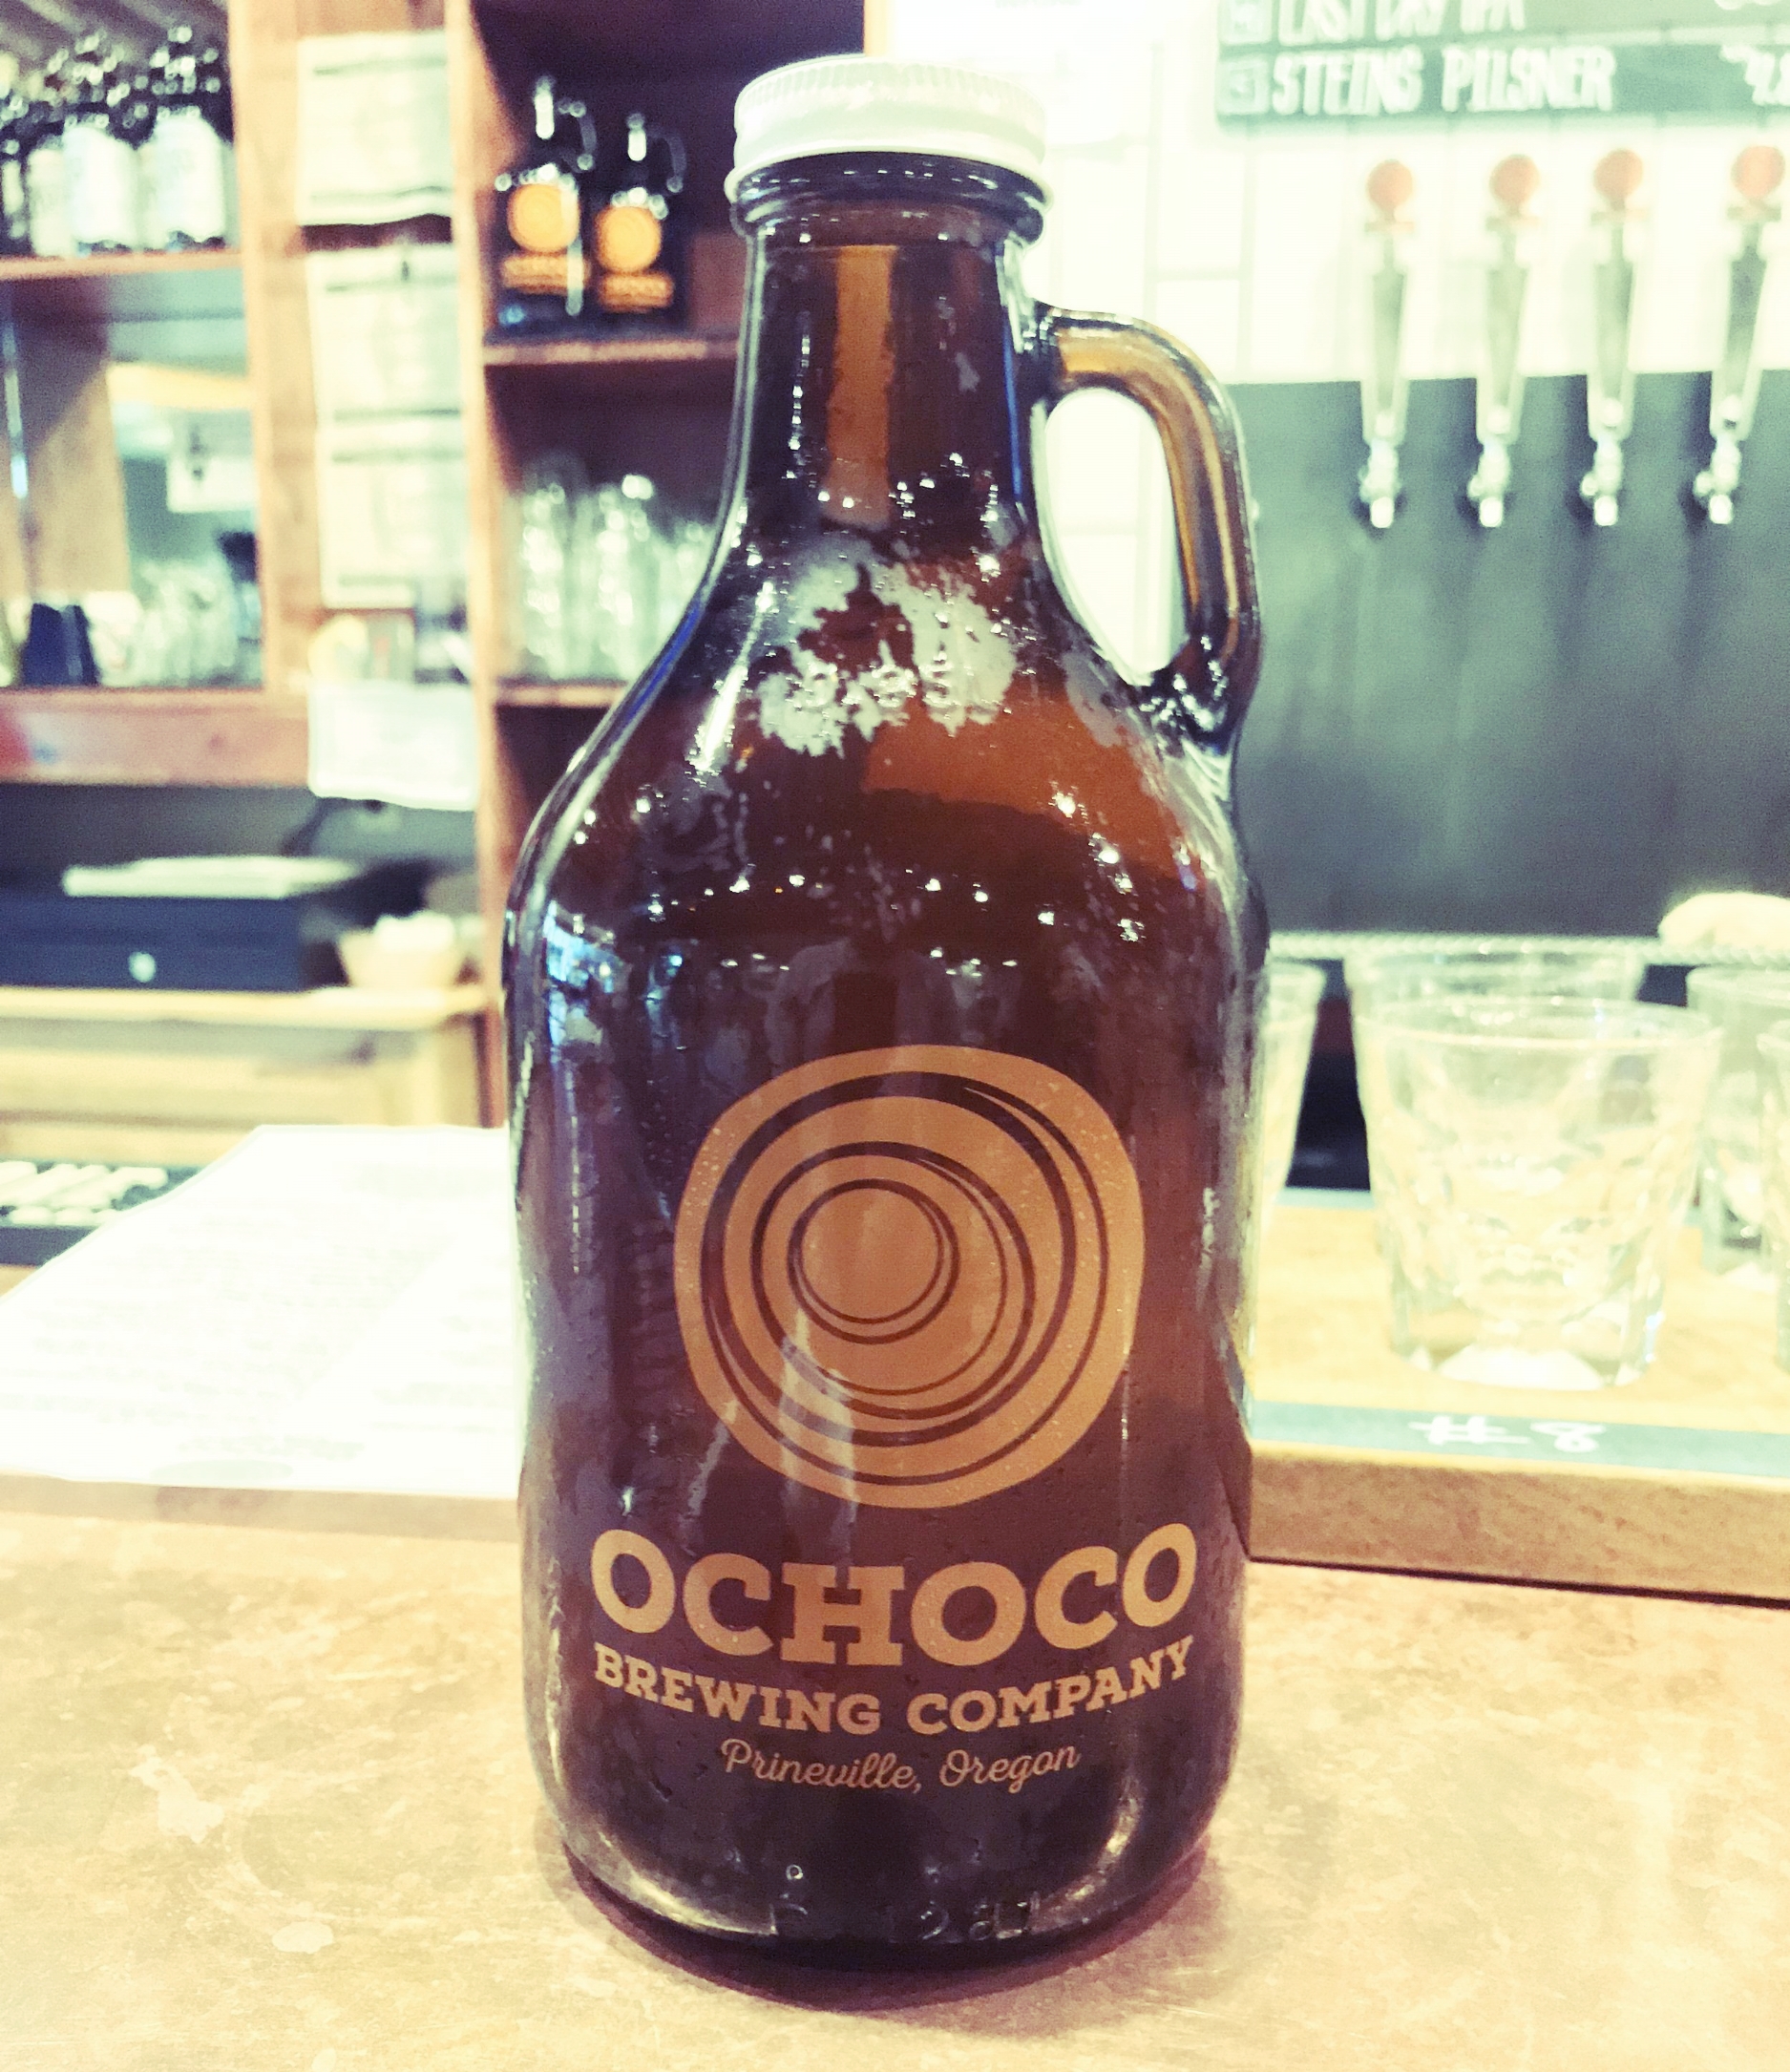 Ochoco Brewing Company